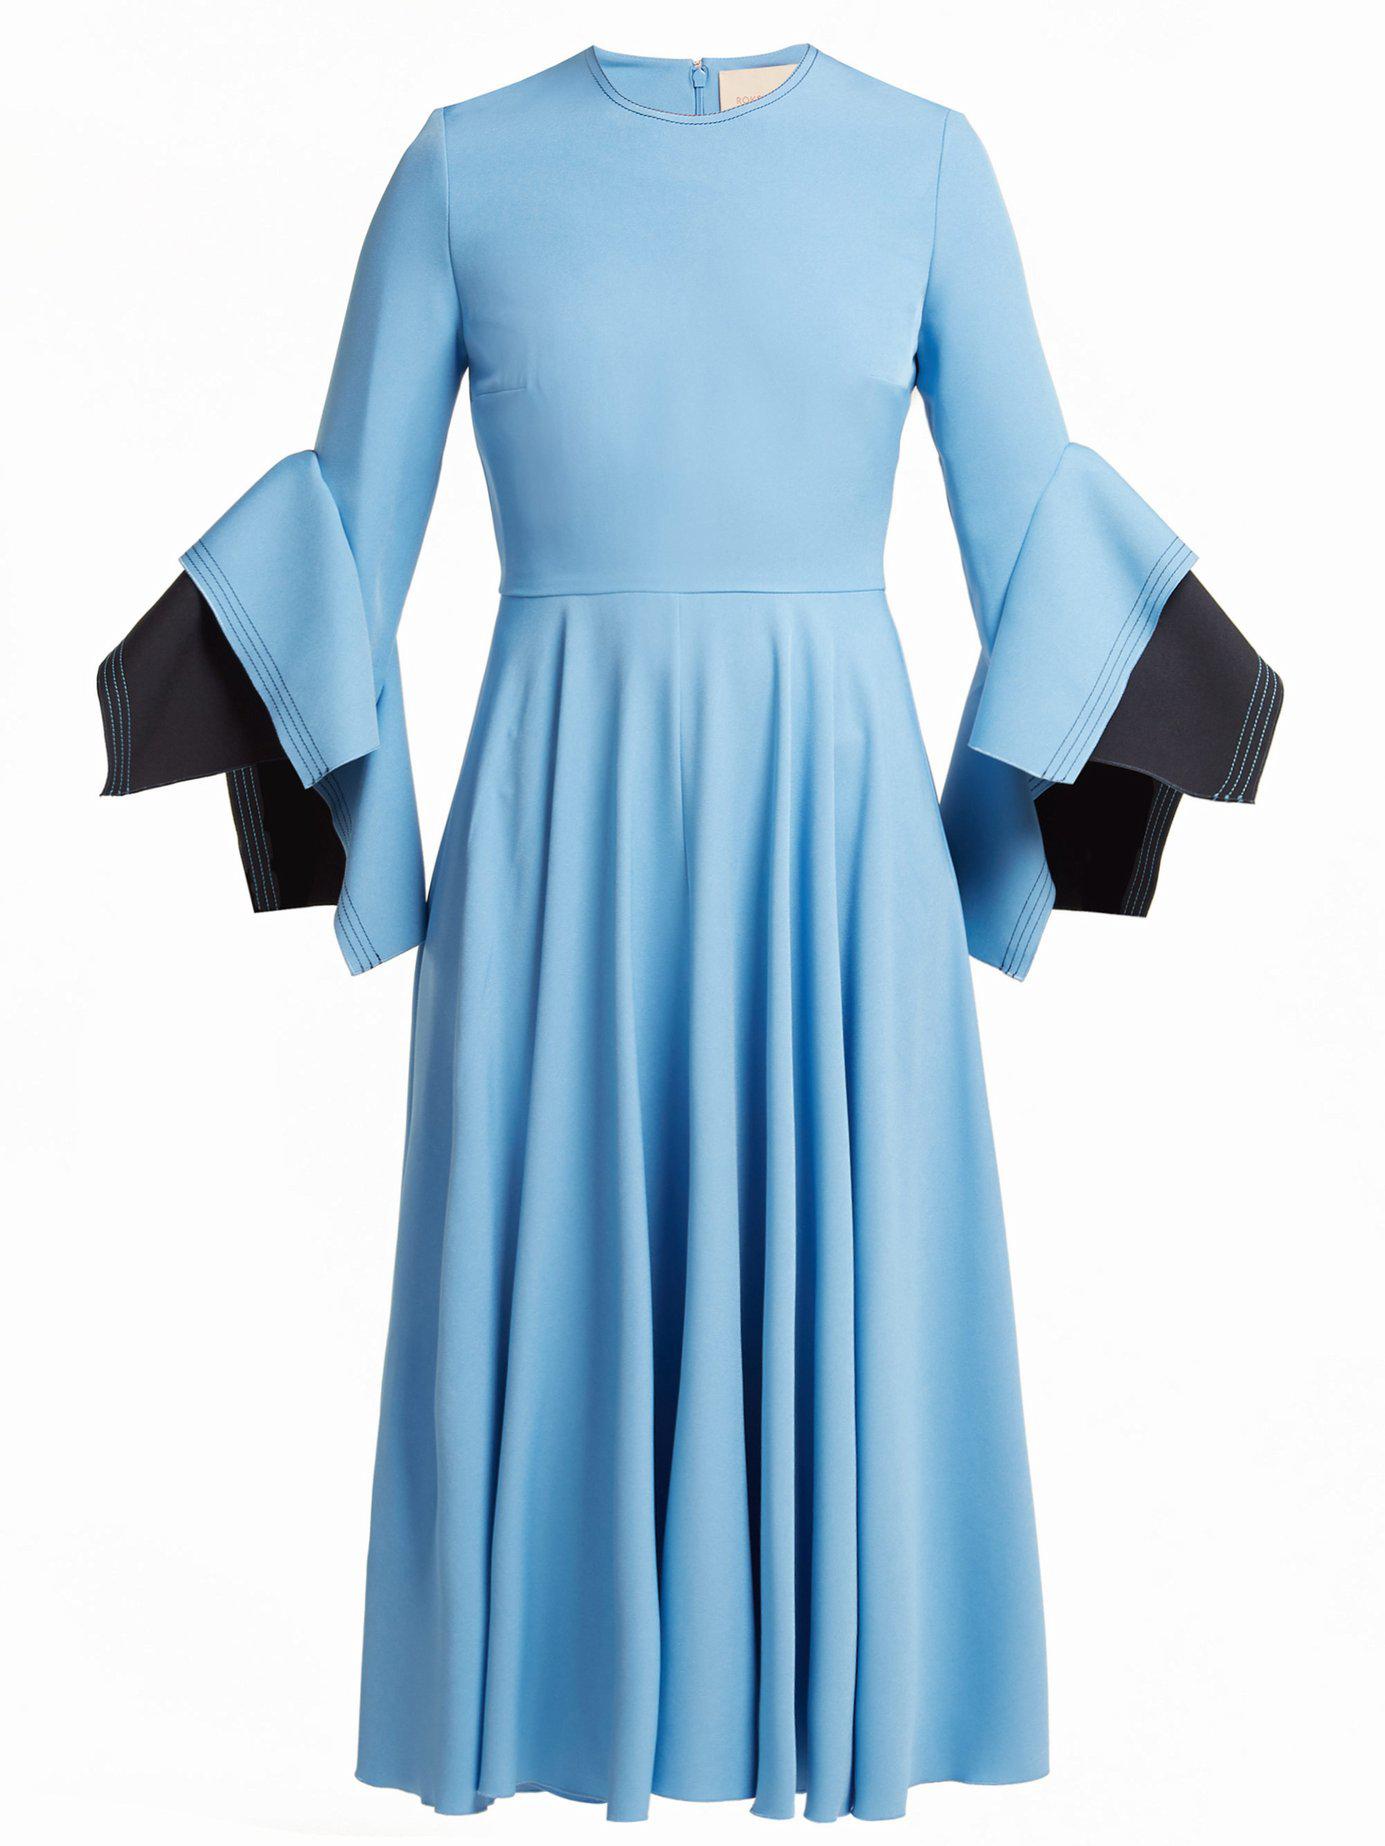 ROKSANDA Flared Sleeve Cady Midi Dress in Light Blue (Blue) - Lyst